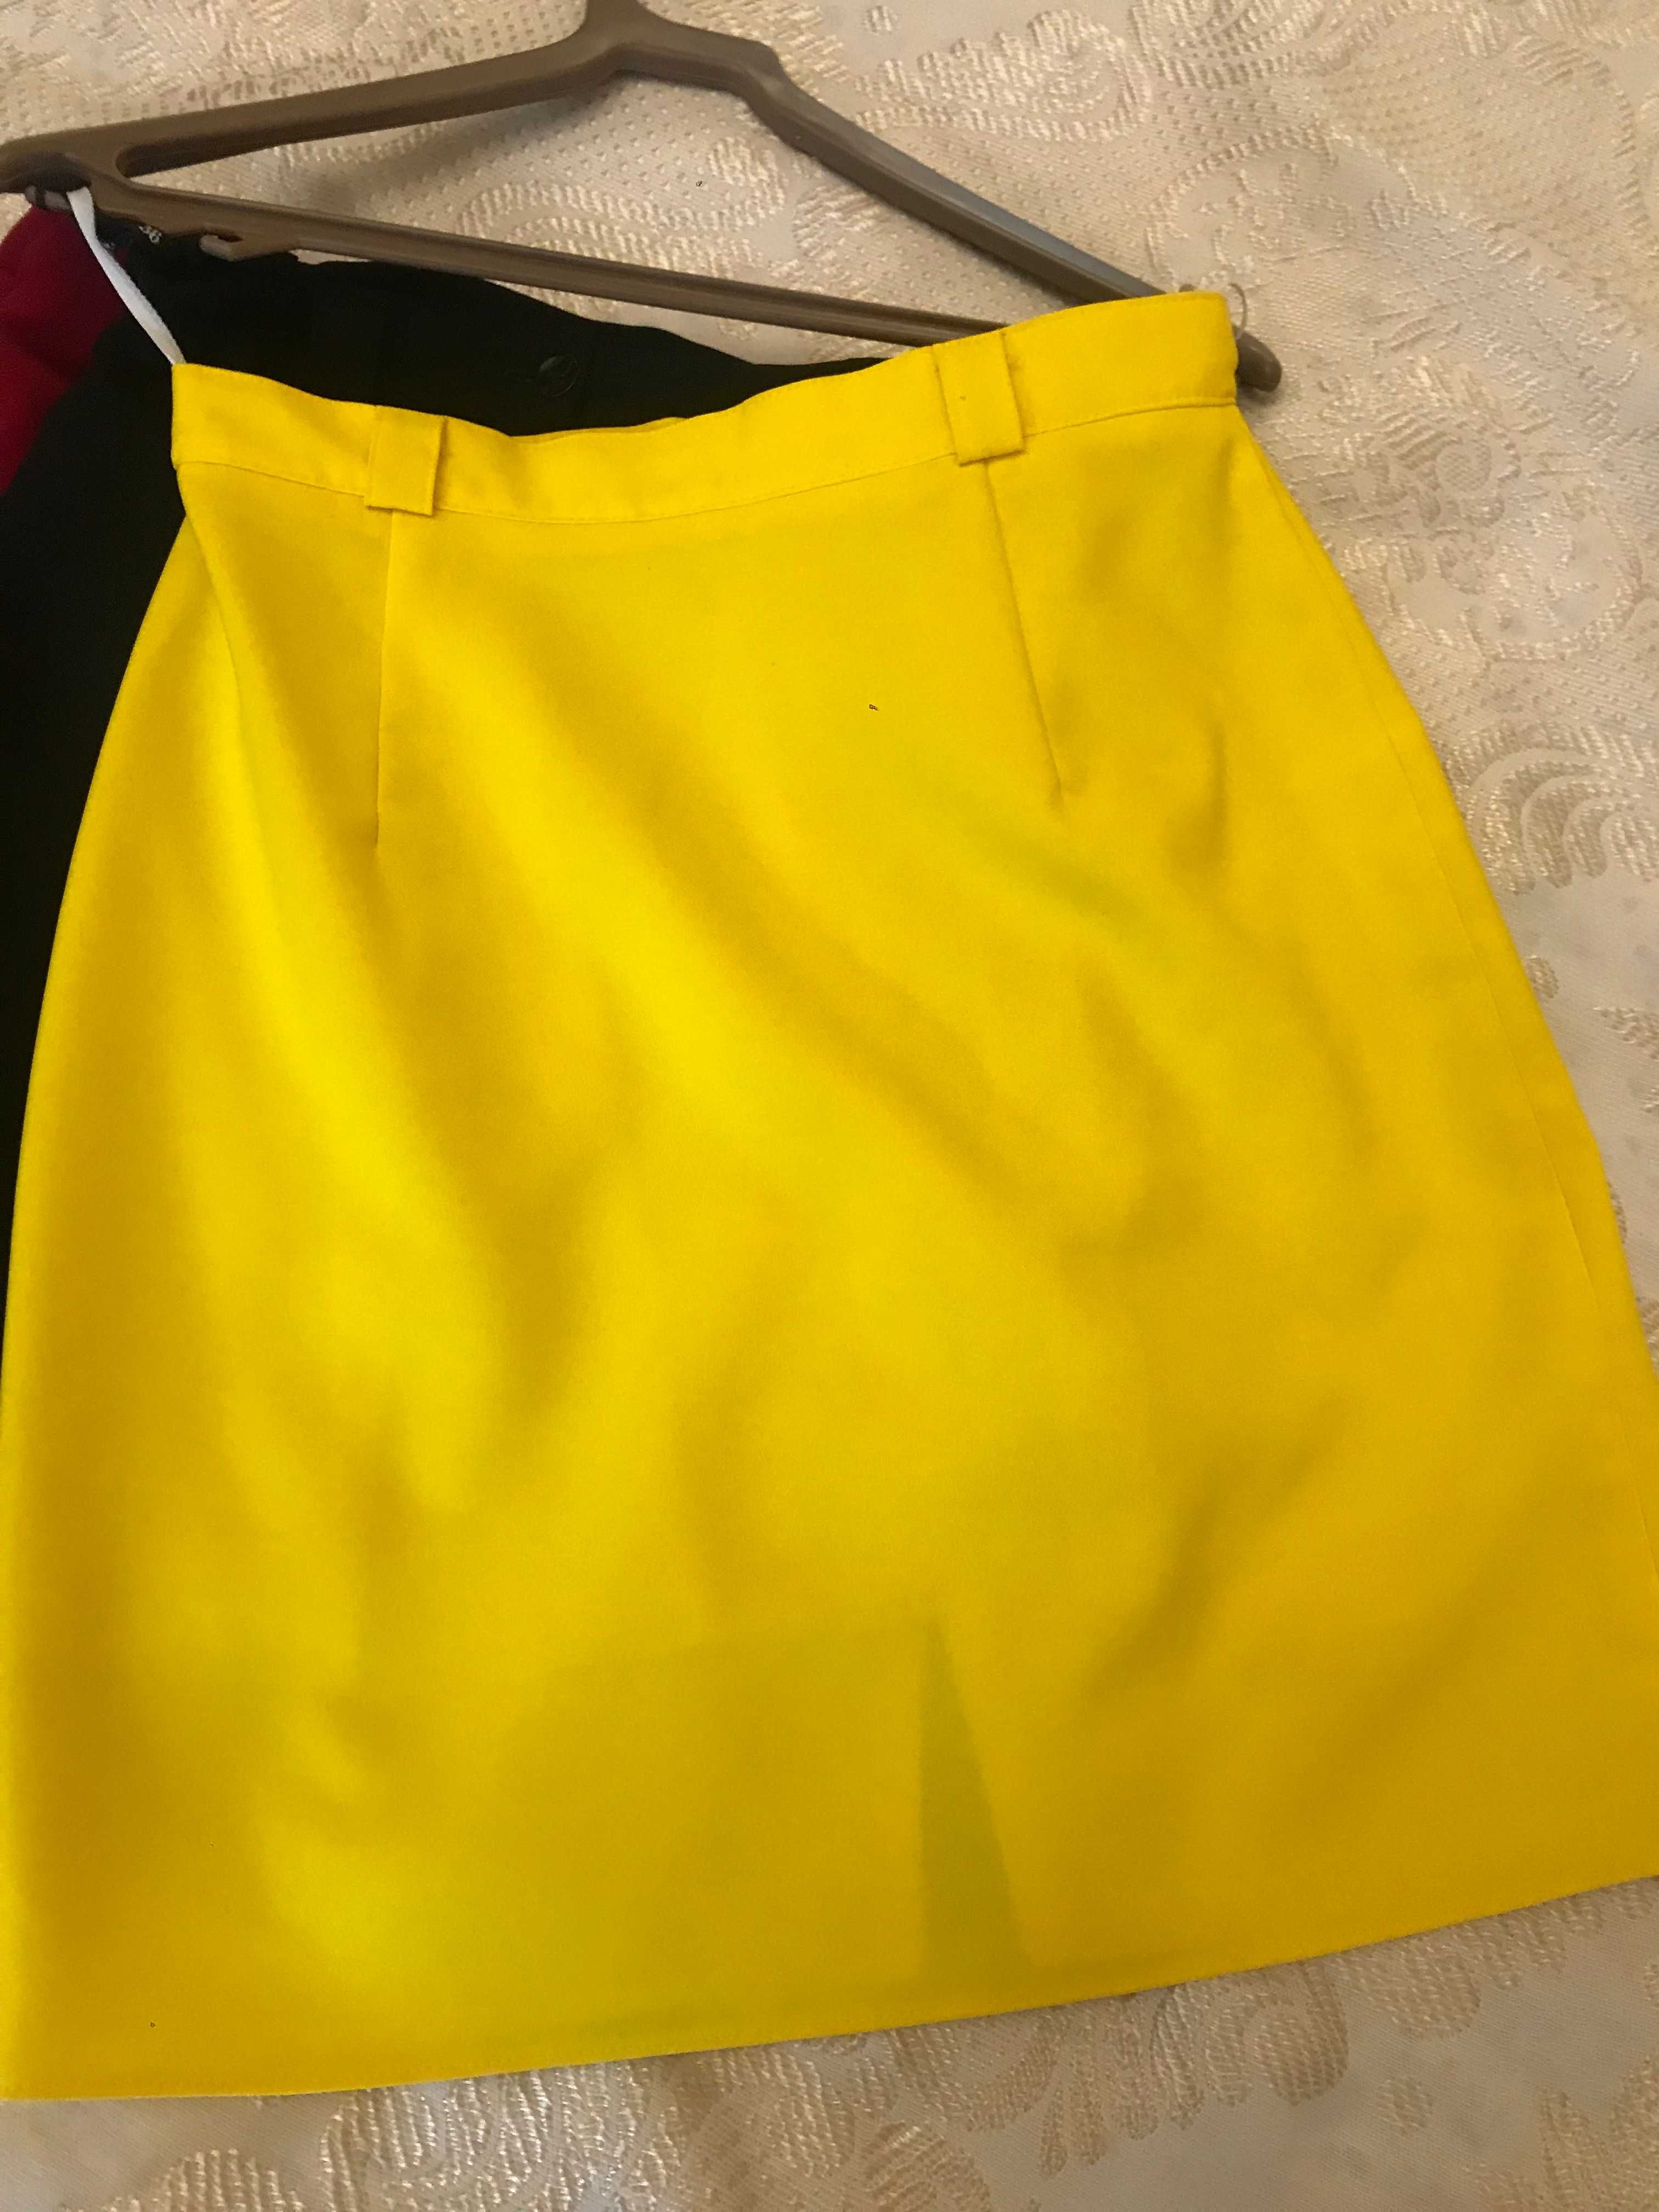 Piękna żółta spódniczka S.  LUX !!!